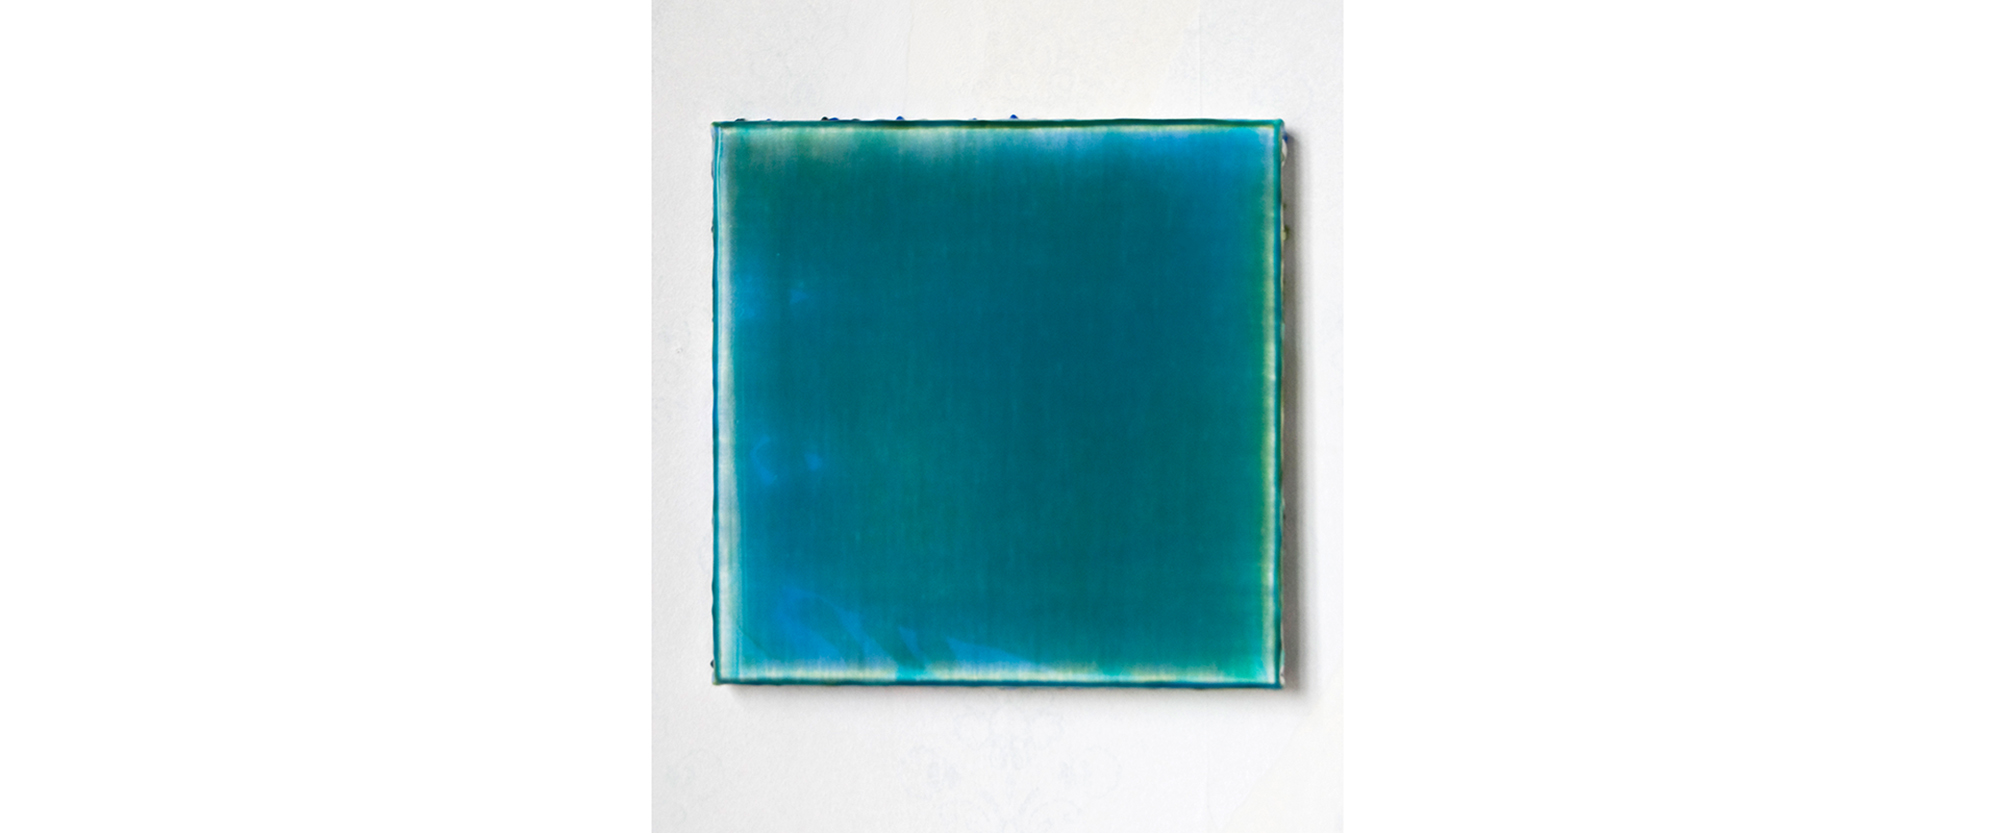 20151204 - 2015, Acryl auf Leinwand, 25 x 25 cm